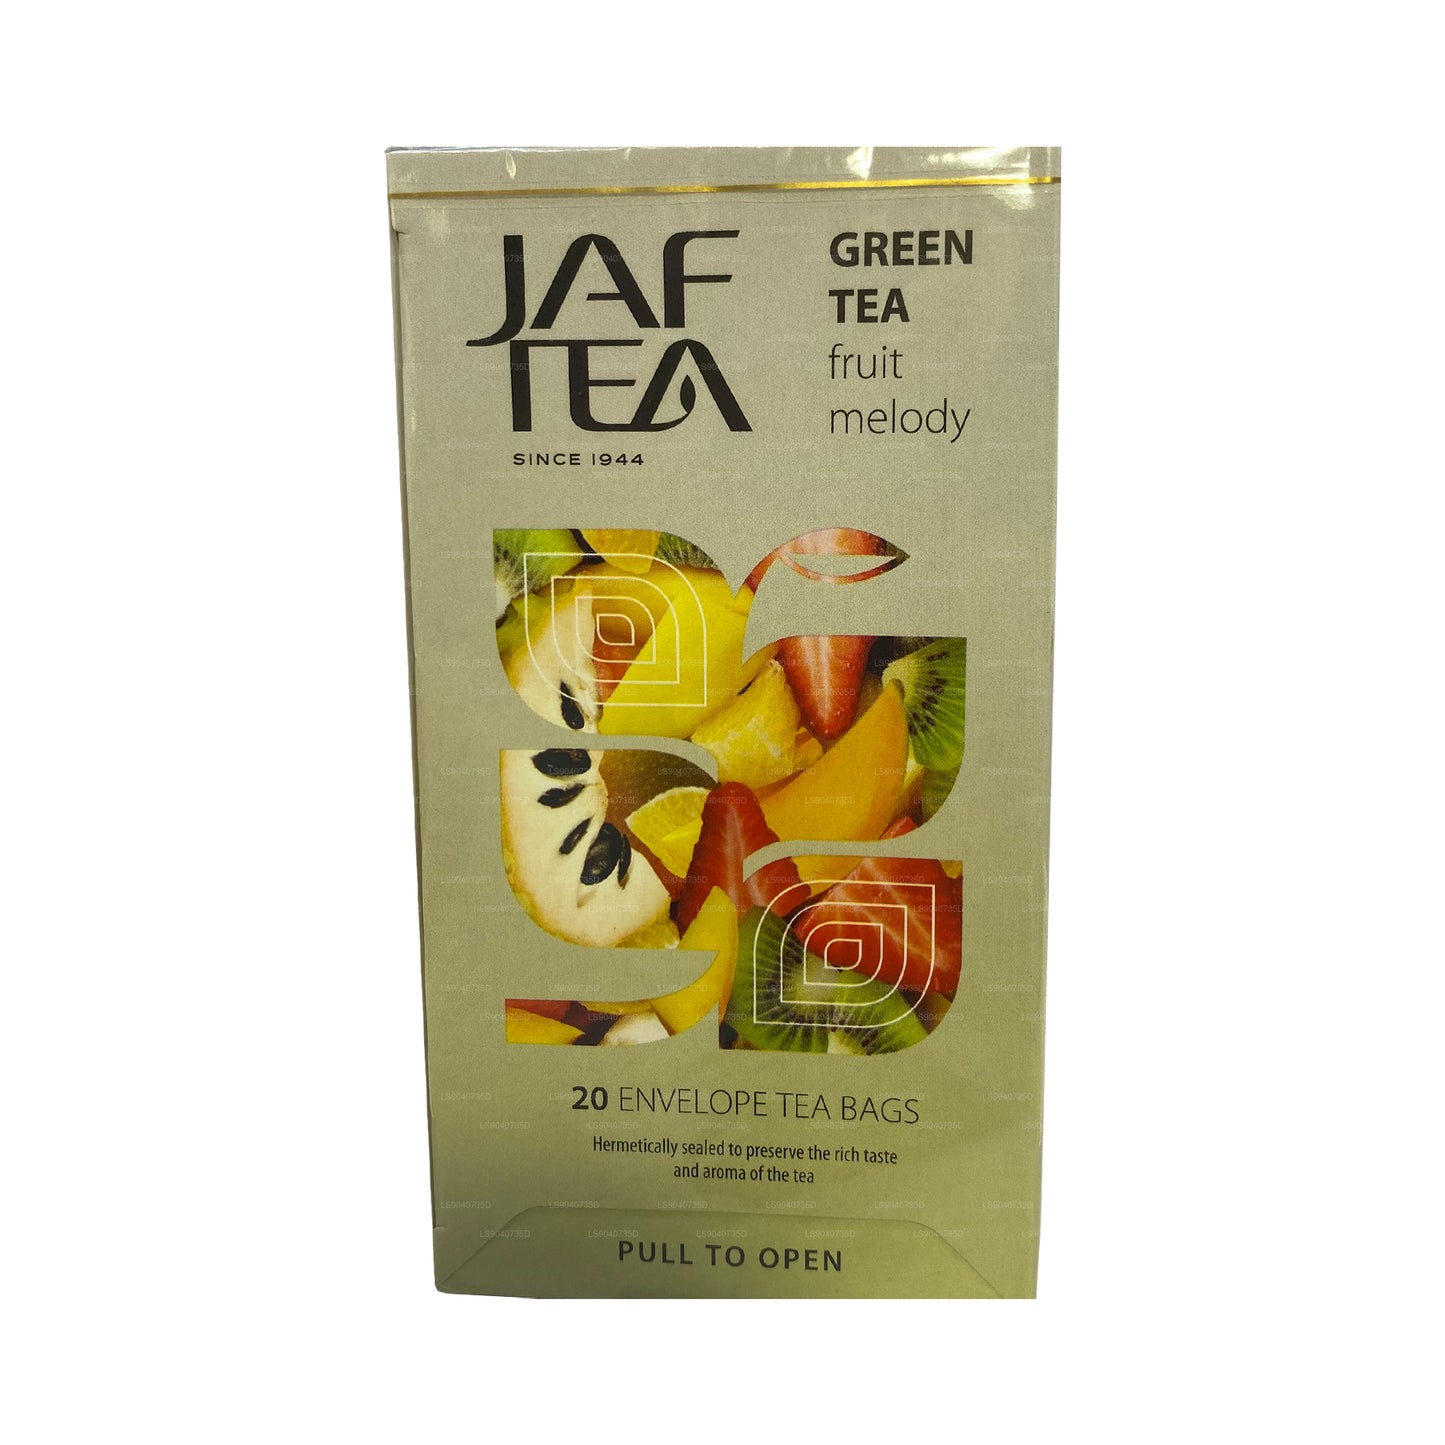 Jaf Tea Pure Green Collection Yeşil Çay Meyve Melodisi (40g) 20 Çay Poşeti